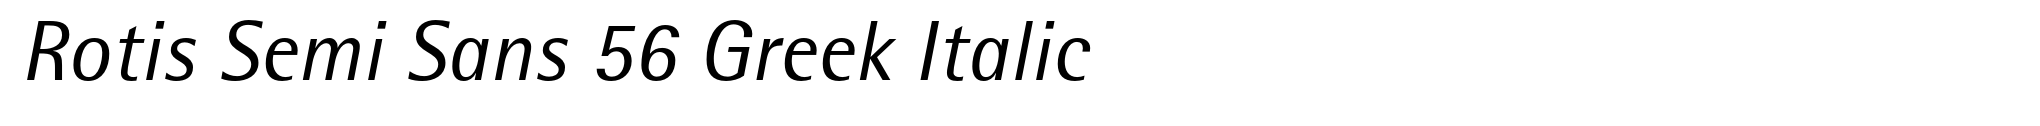 Rotis Semi Sans 56 Greek Italic image